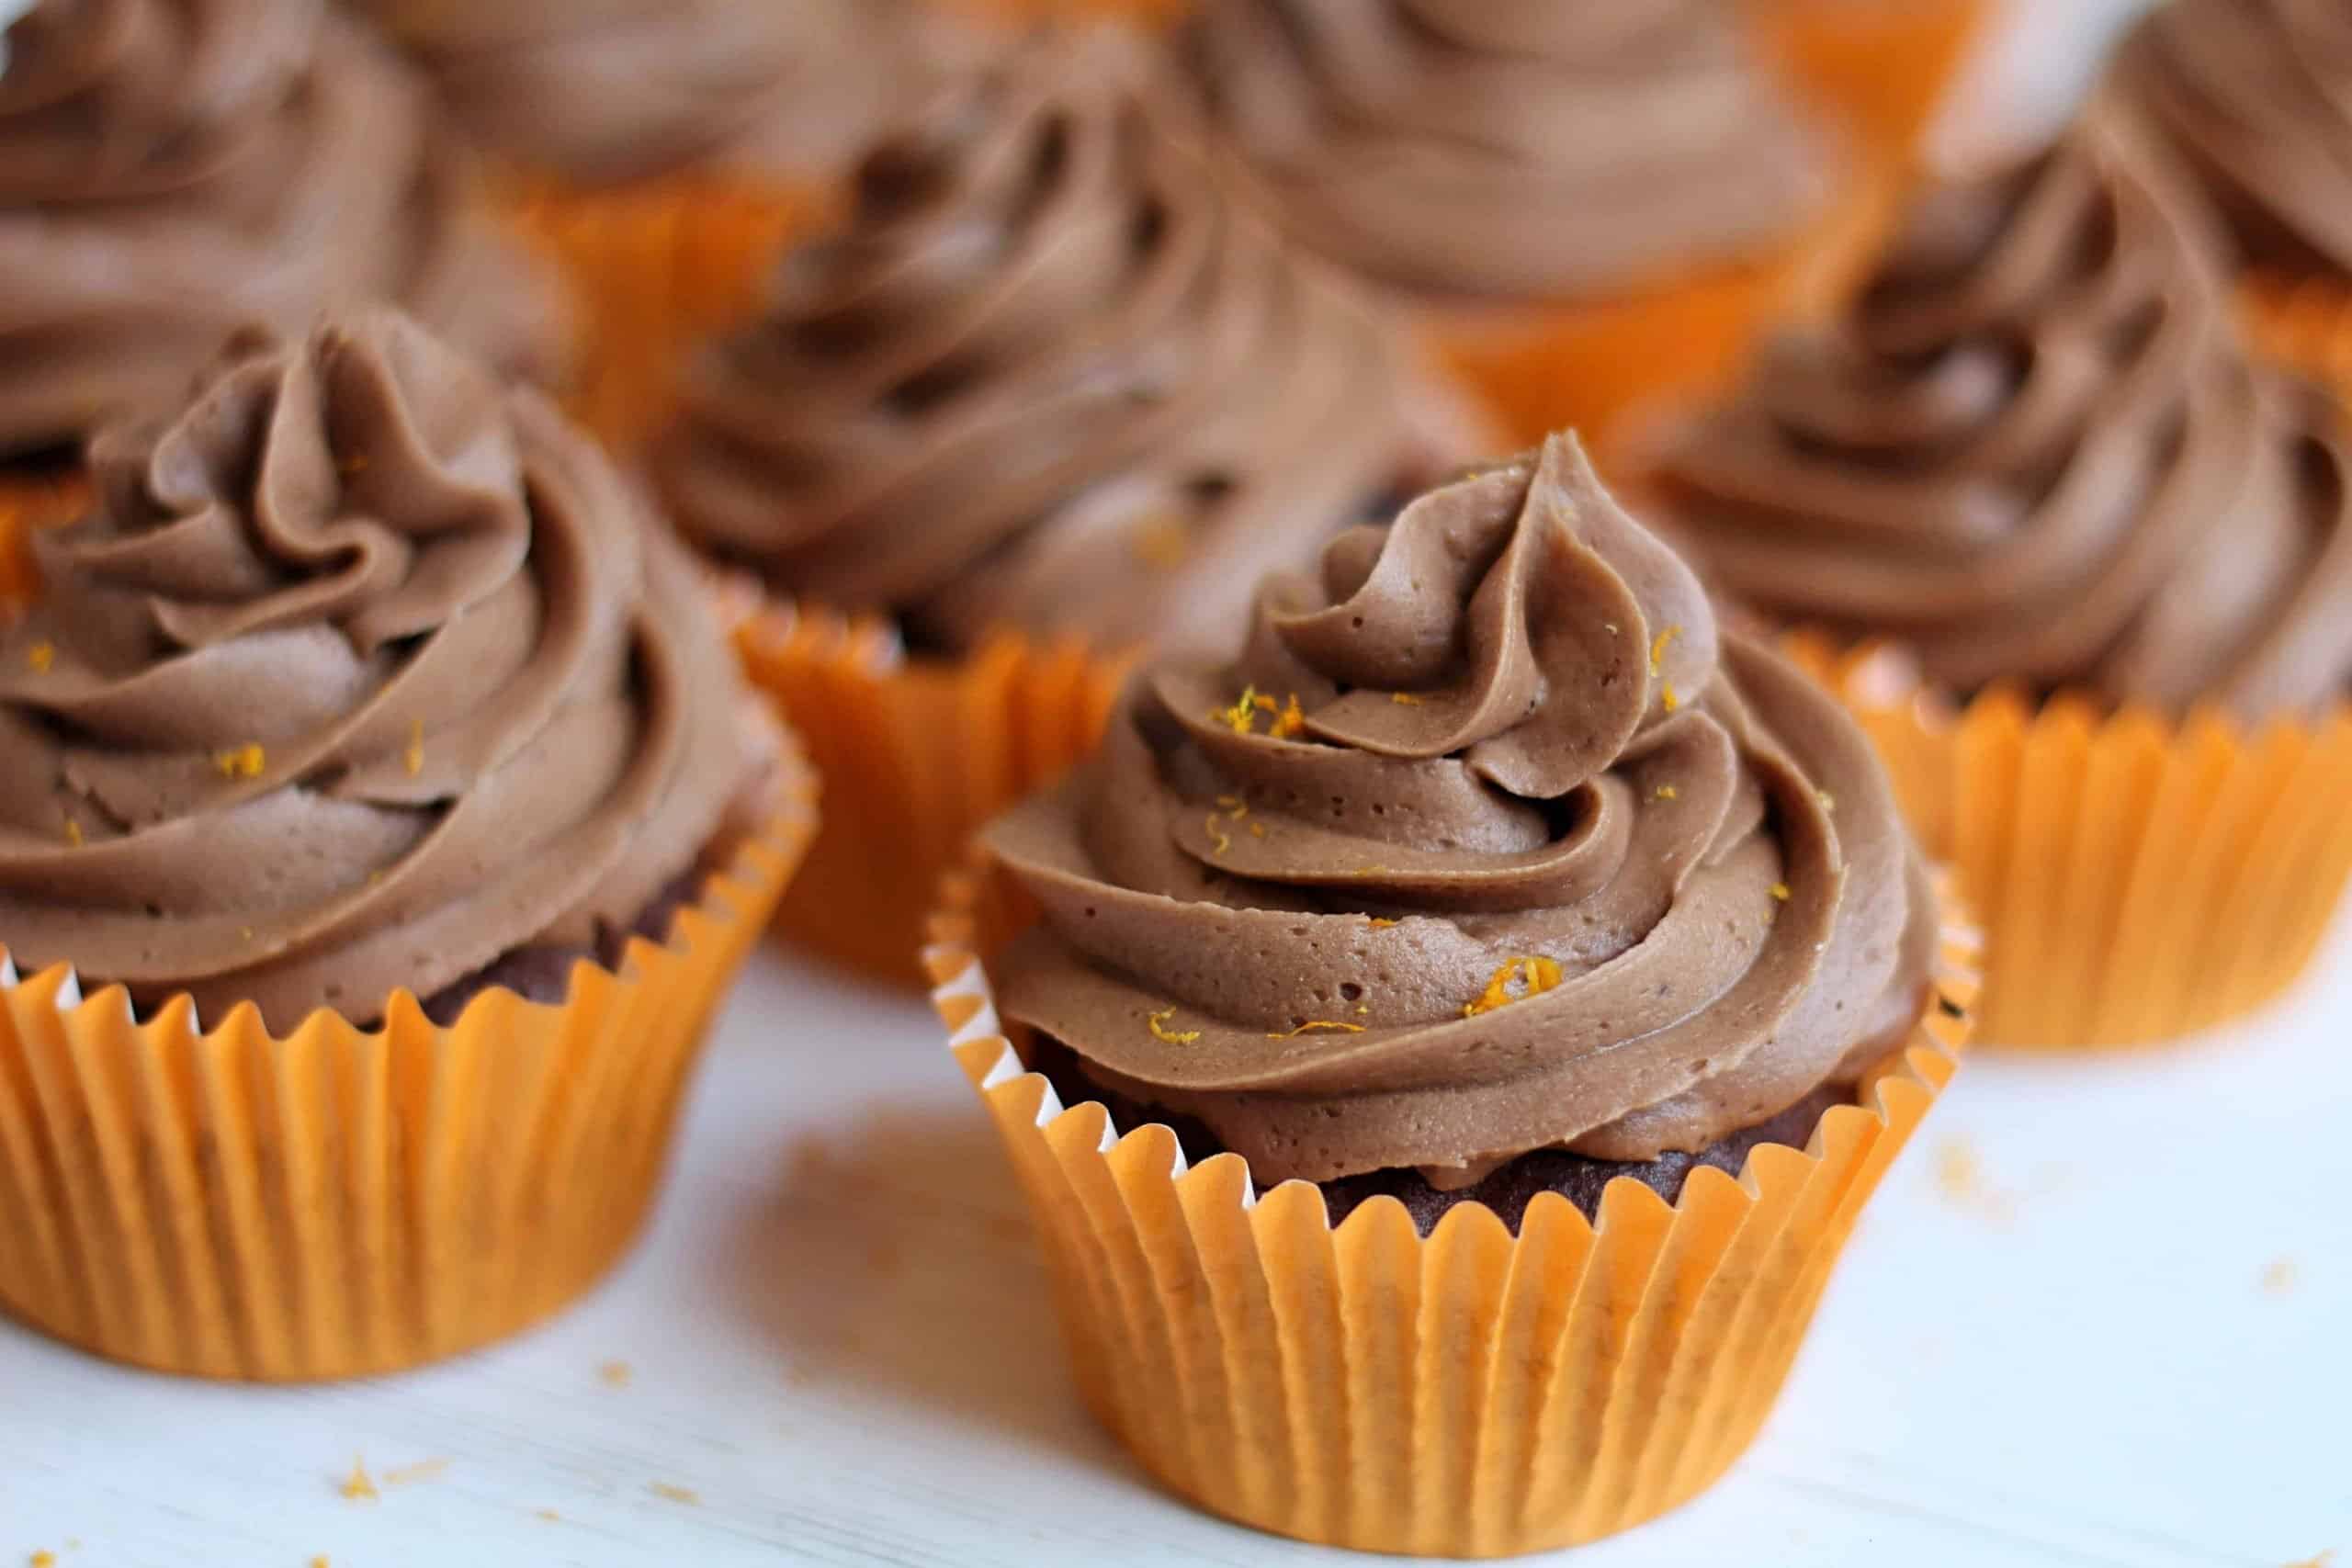 Gluten Free Chocolate Orange Cupcakes Recipe